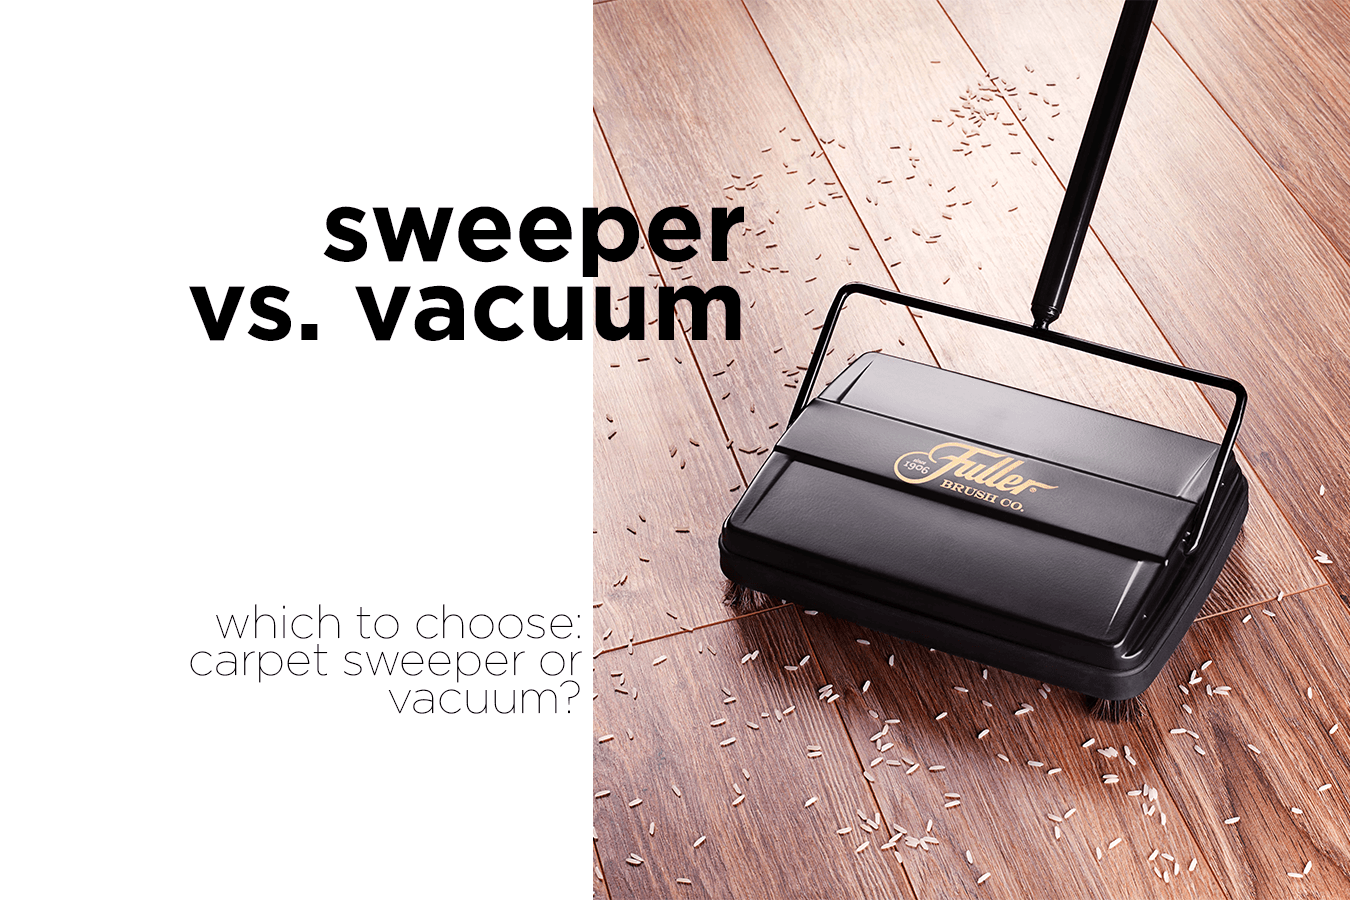 Sweeper vs. Vacuum